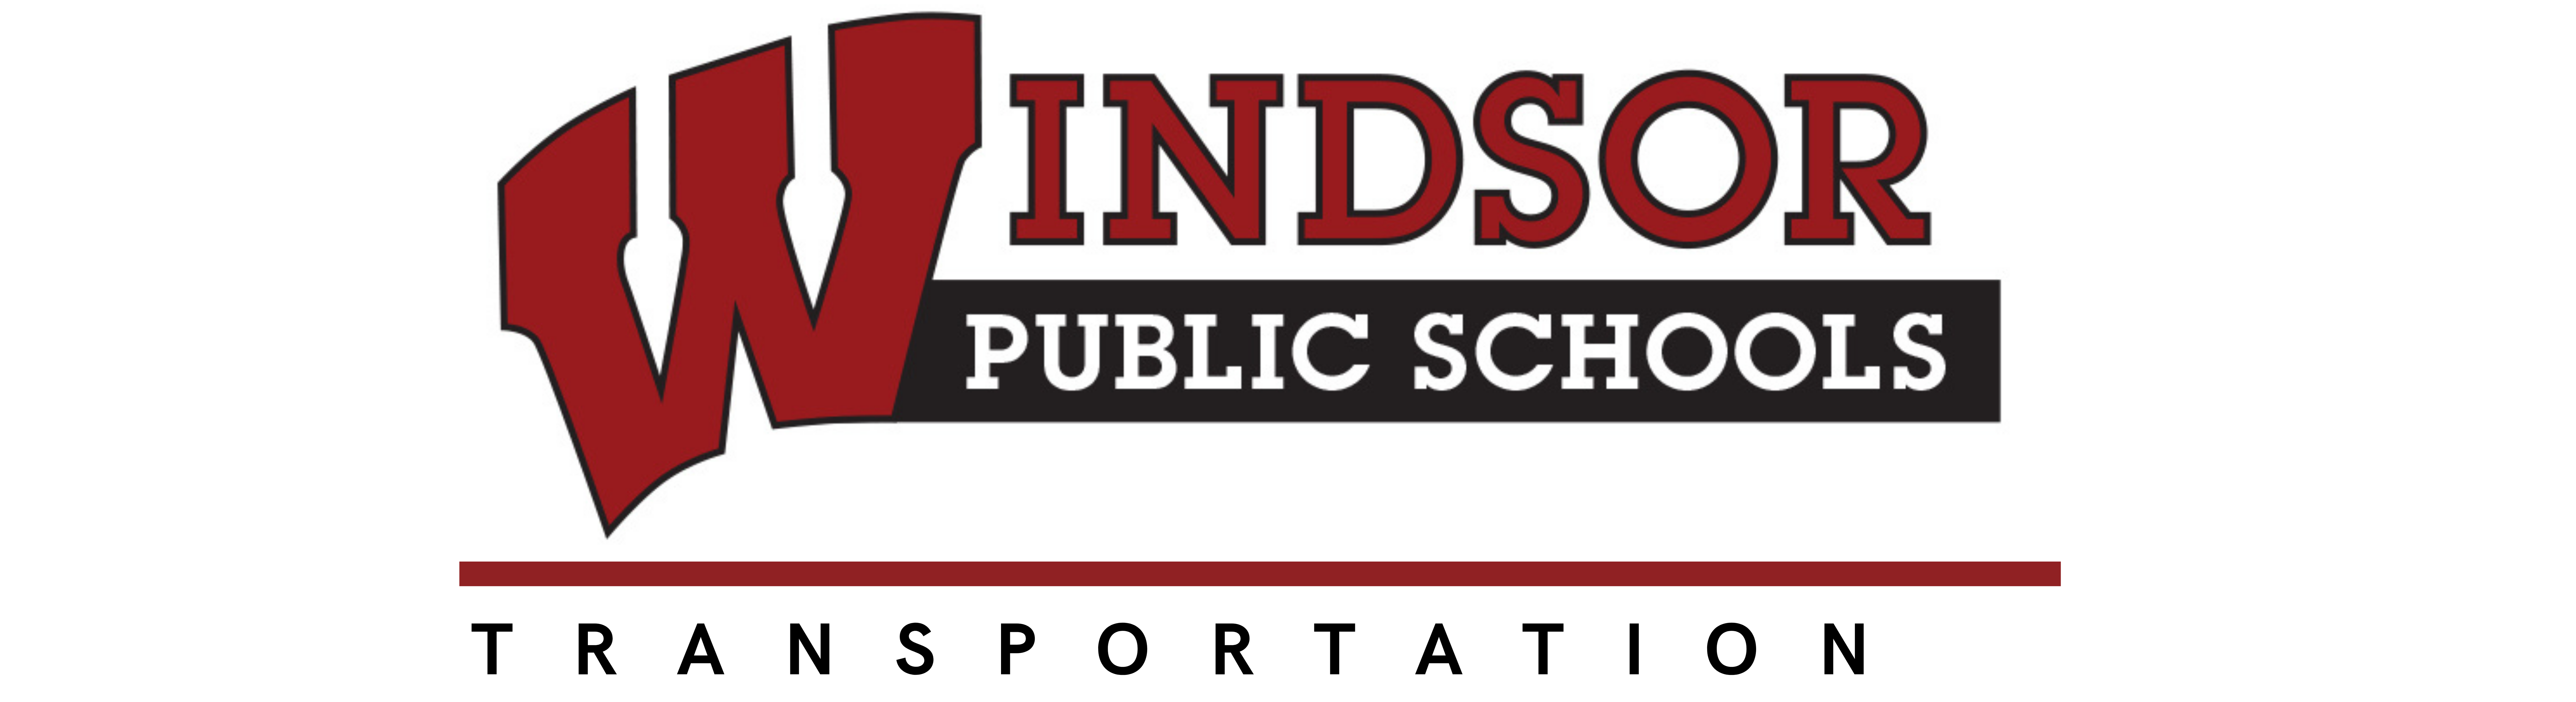 windsor public schools logo transportation department